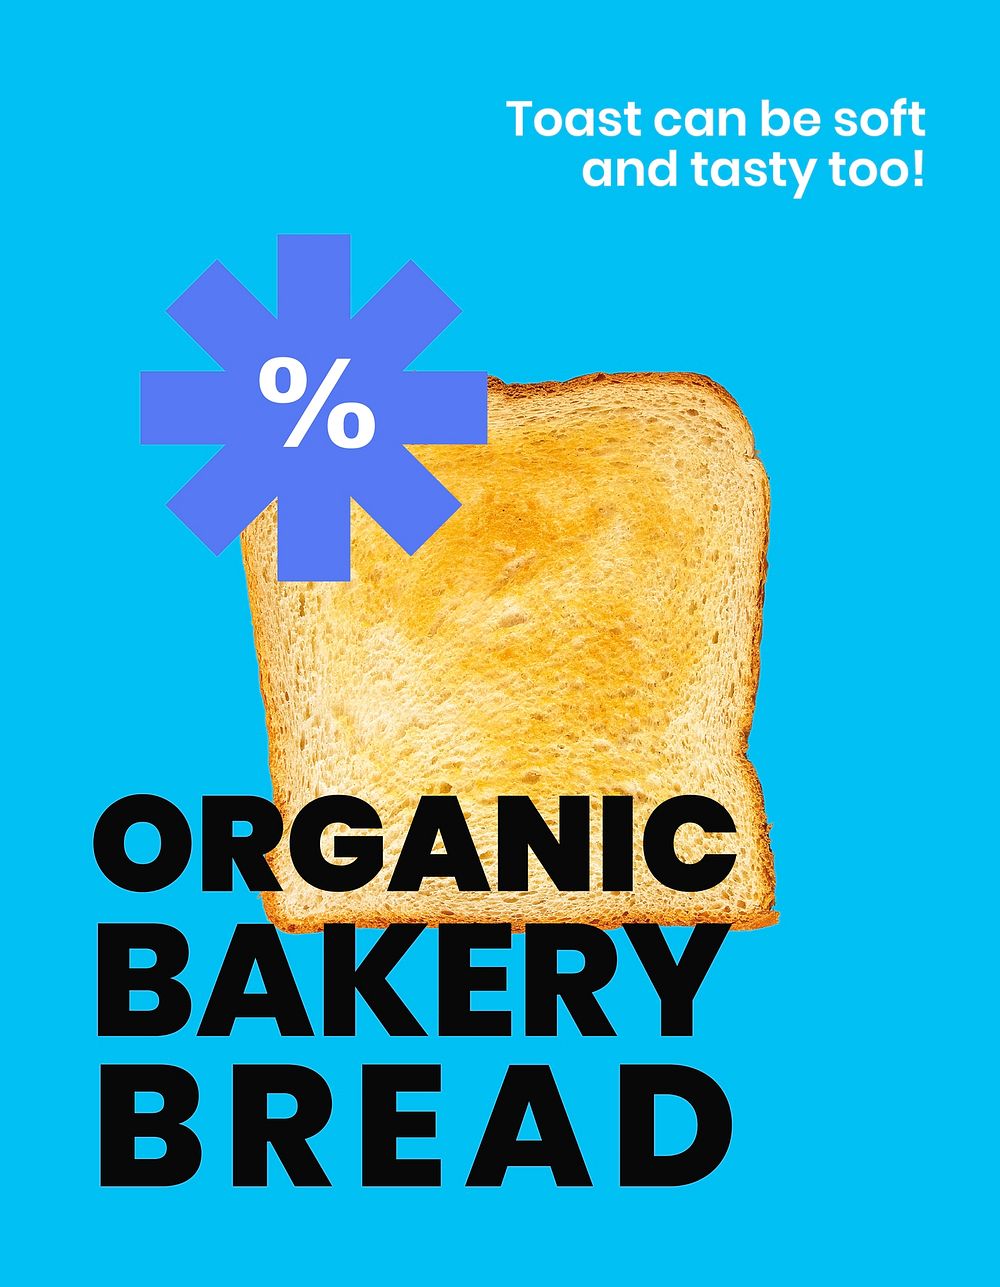 Toast breakfast flyer editable template, bakery advertisement vector